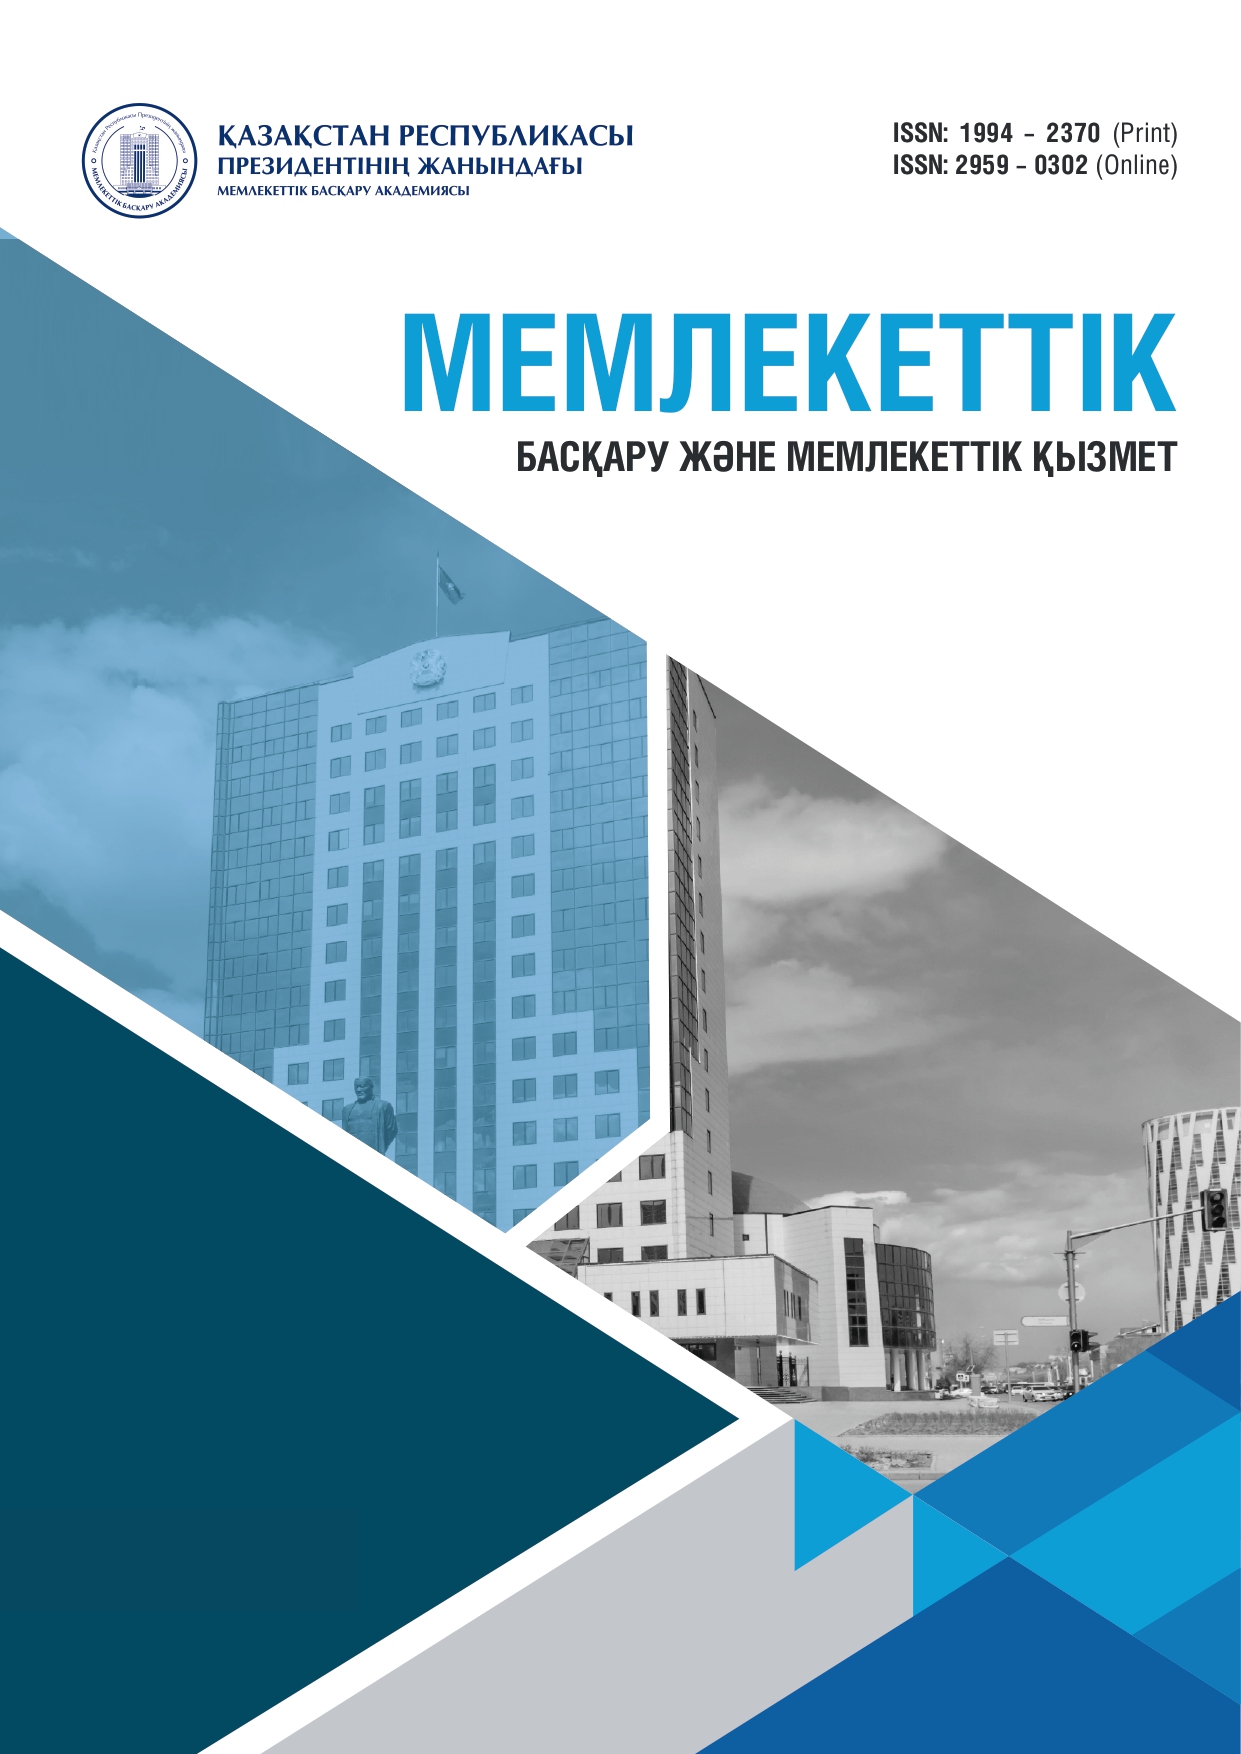 Public Administration and Civil Service | Academy of Public Administration under the President of the Republic of Kazakhstan (Astana, Kazakhstan)